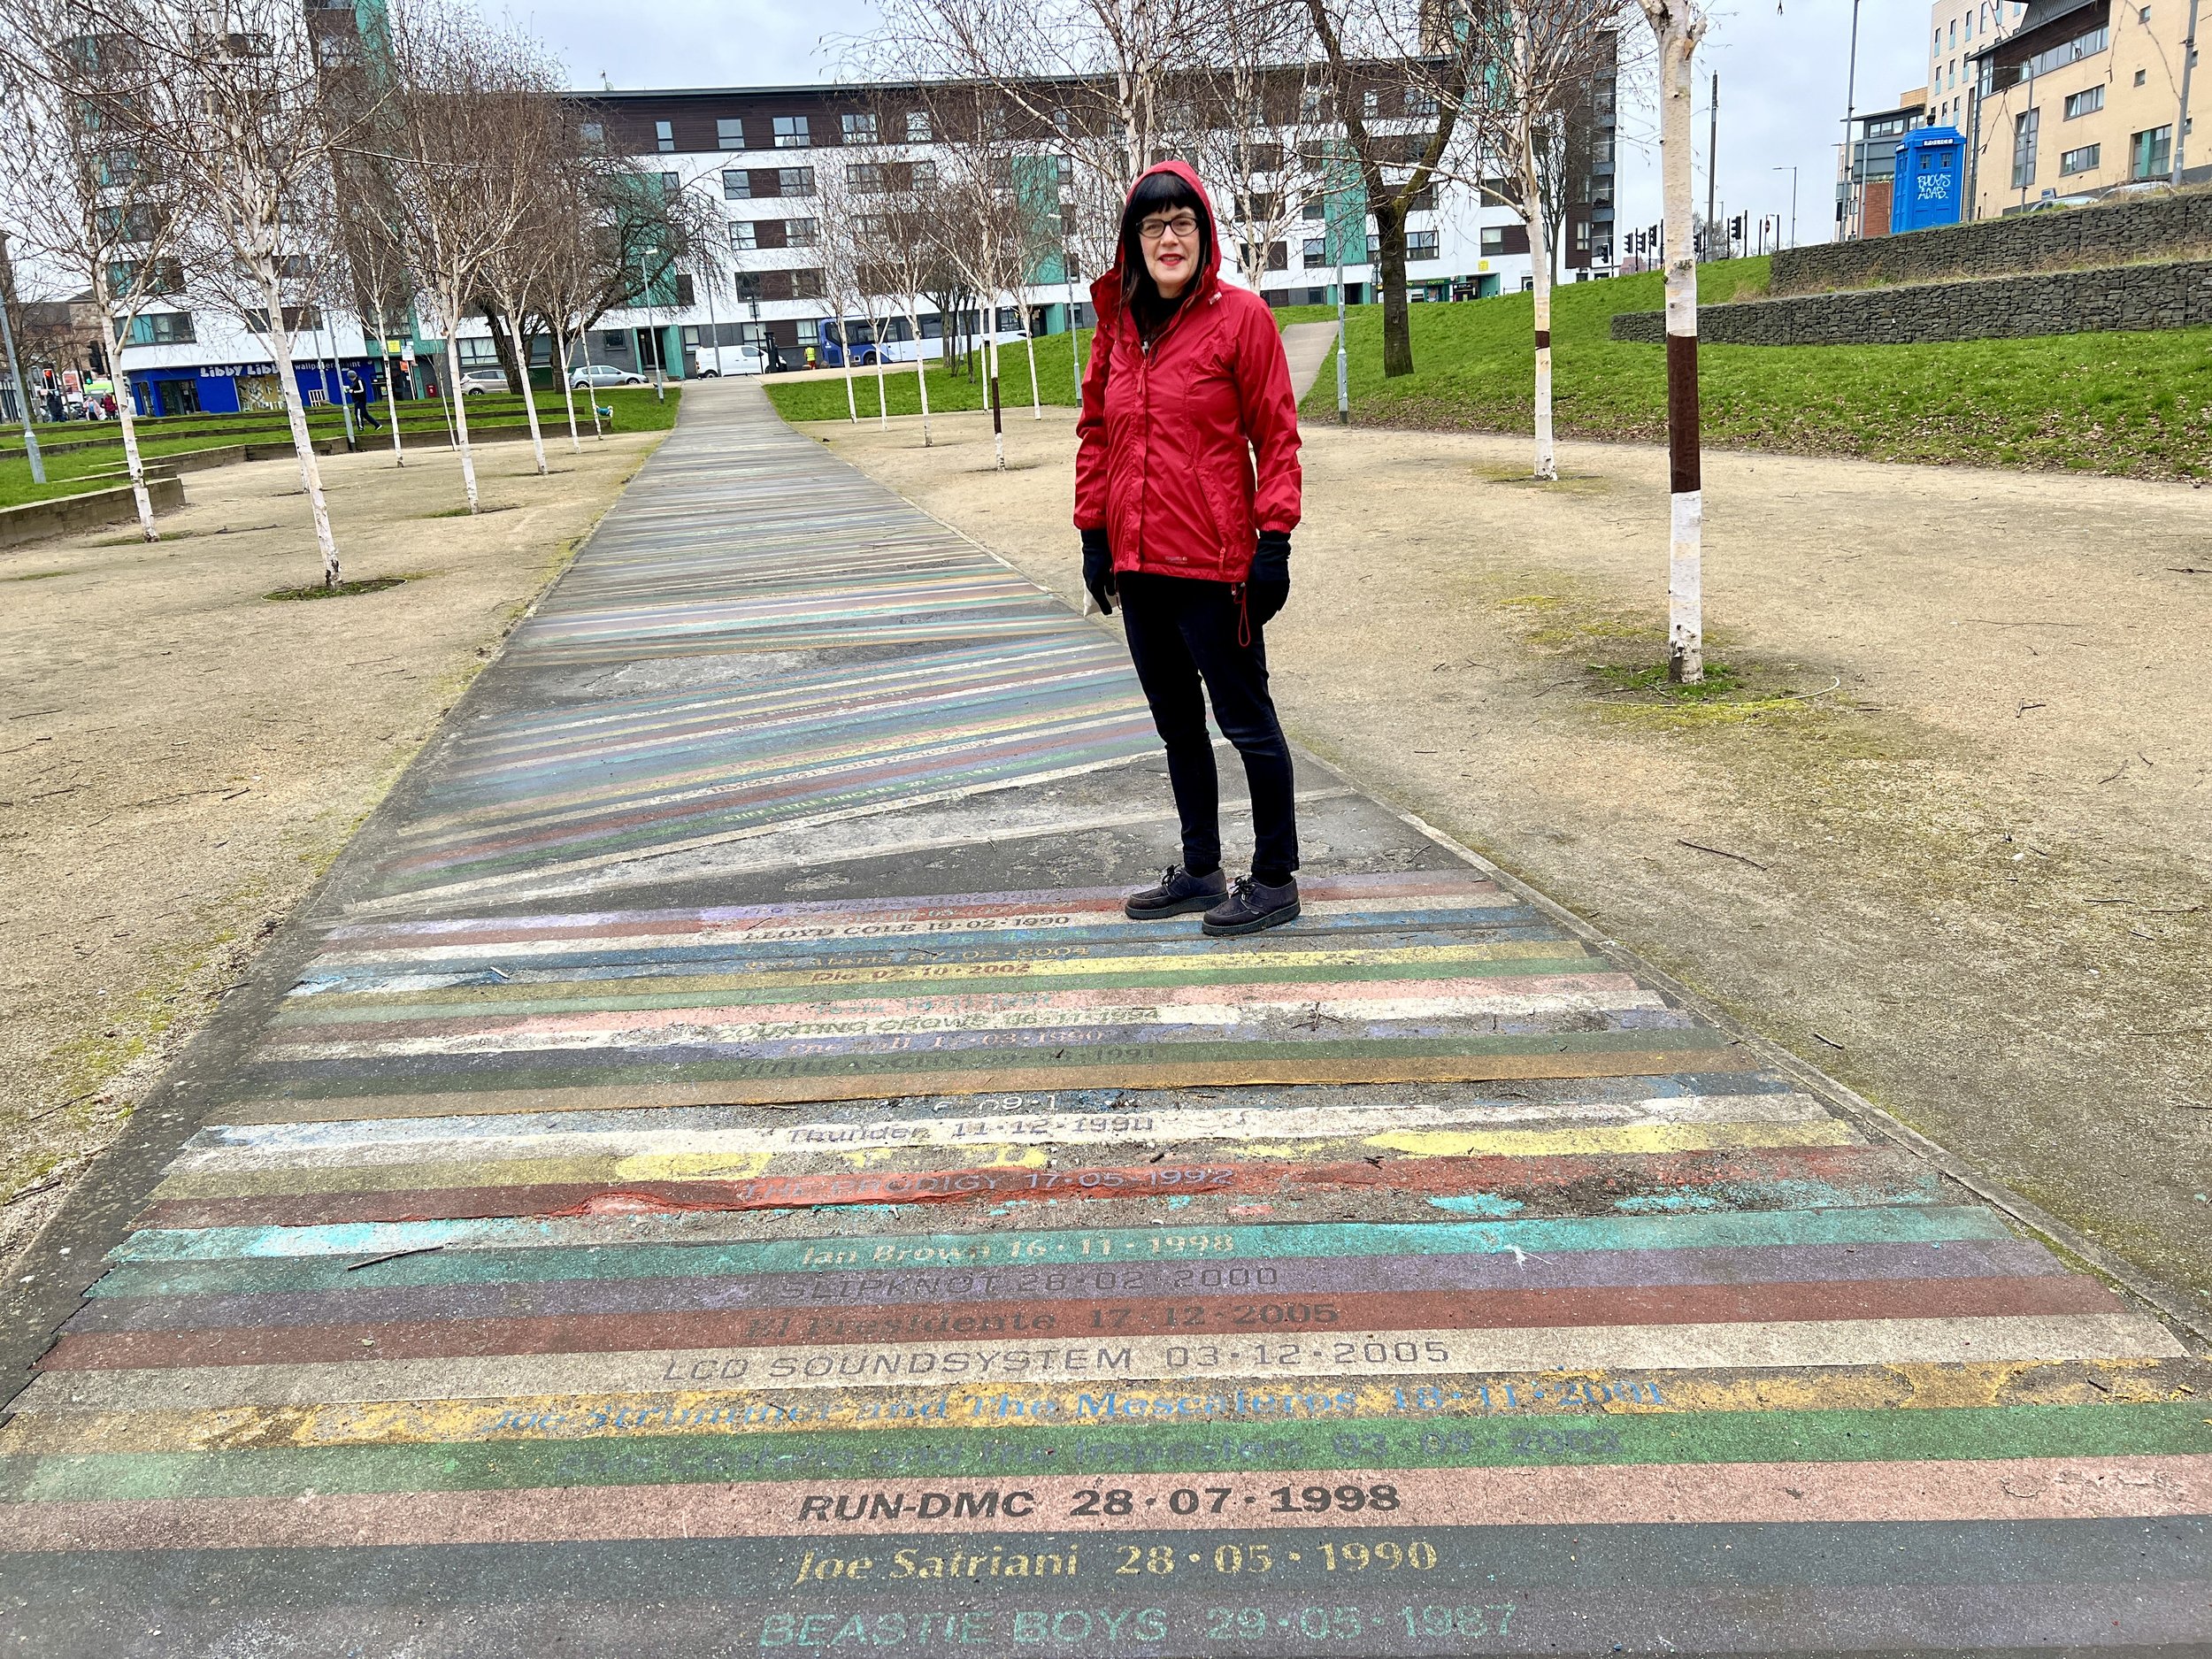 Glasgow Music City Tours co-founder Fiona Shepherd shows off the Barrowlands Park Album Pathway